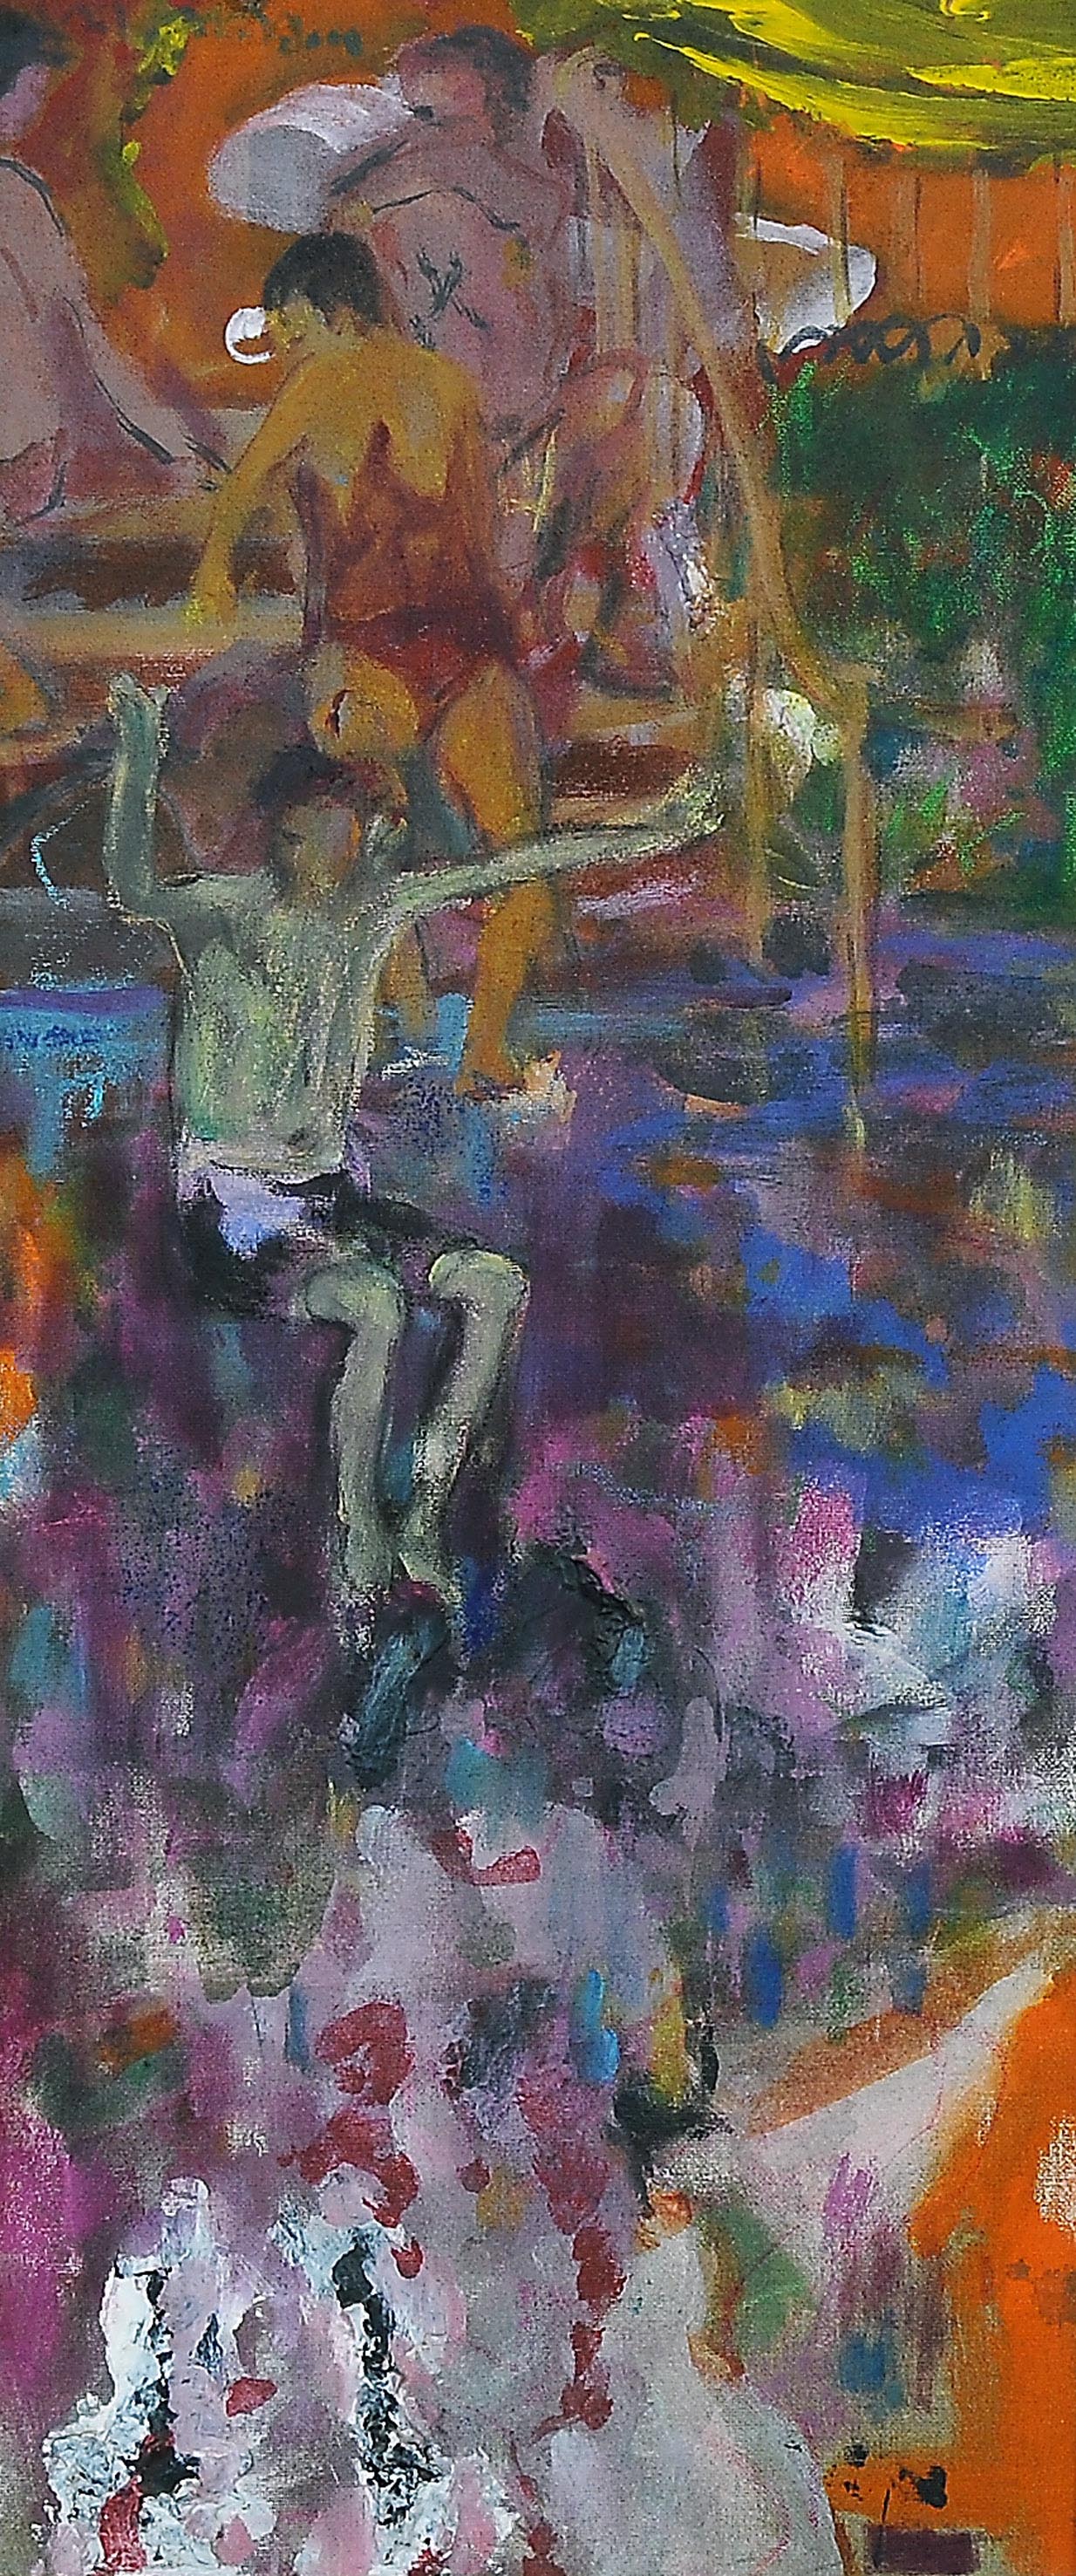 İsimsiz- Untitled, 2000, Tuval üzerine yağlıboya- Oil on canvas, 67x29 cm